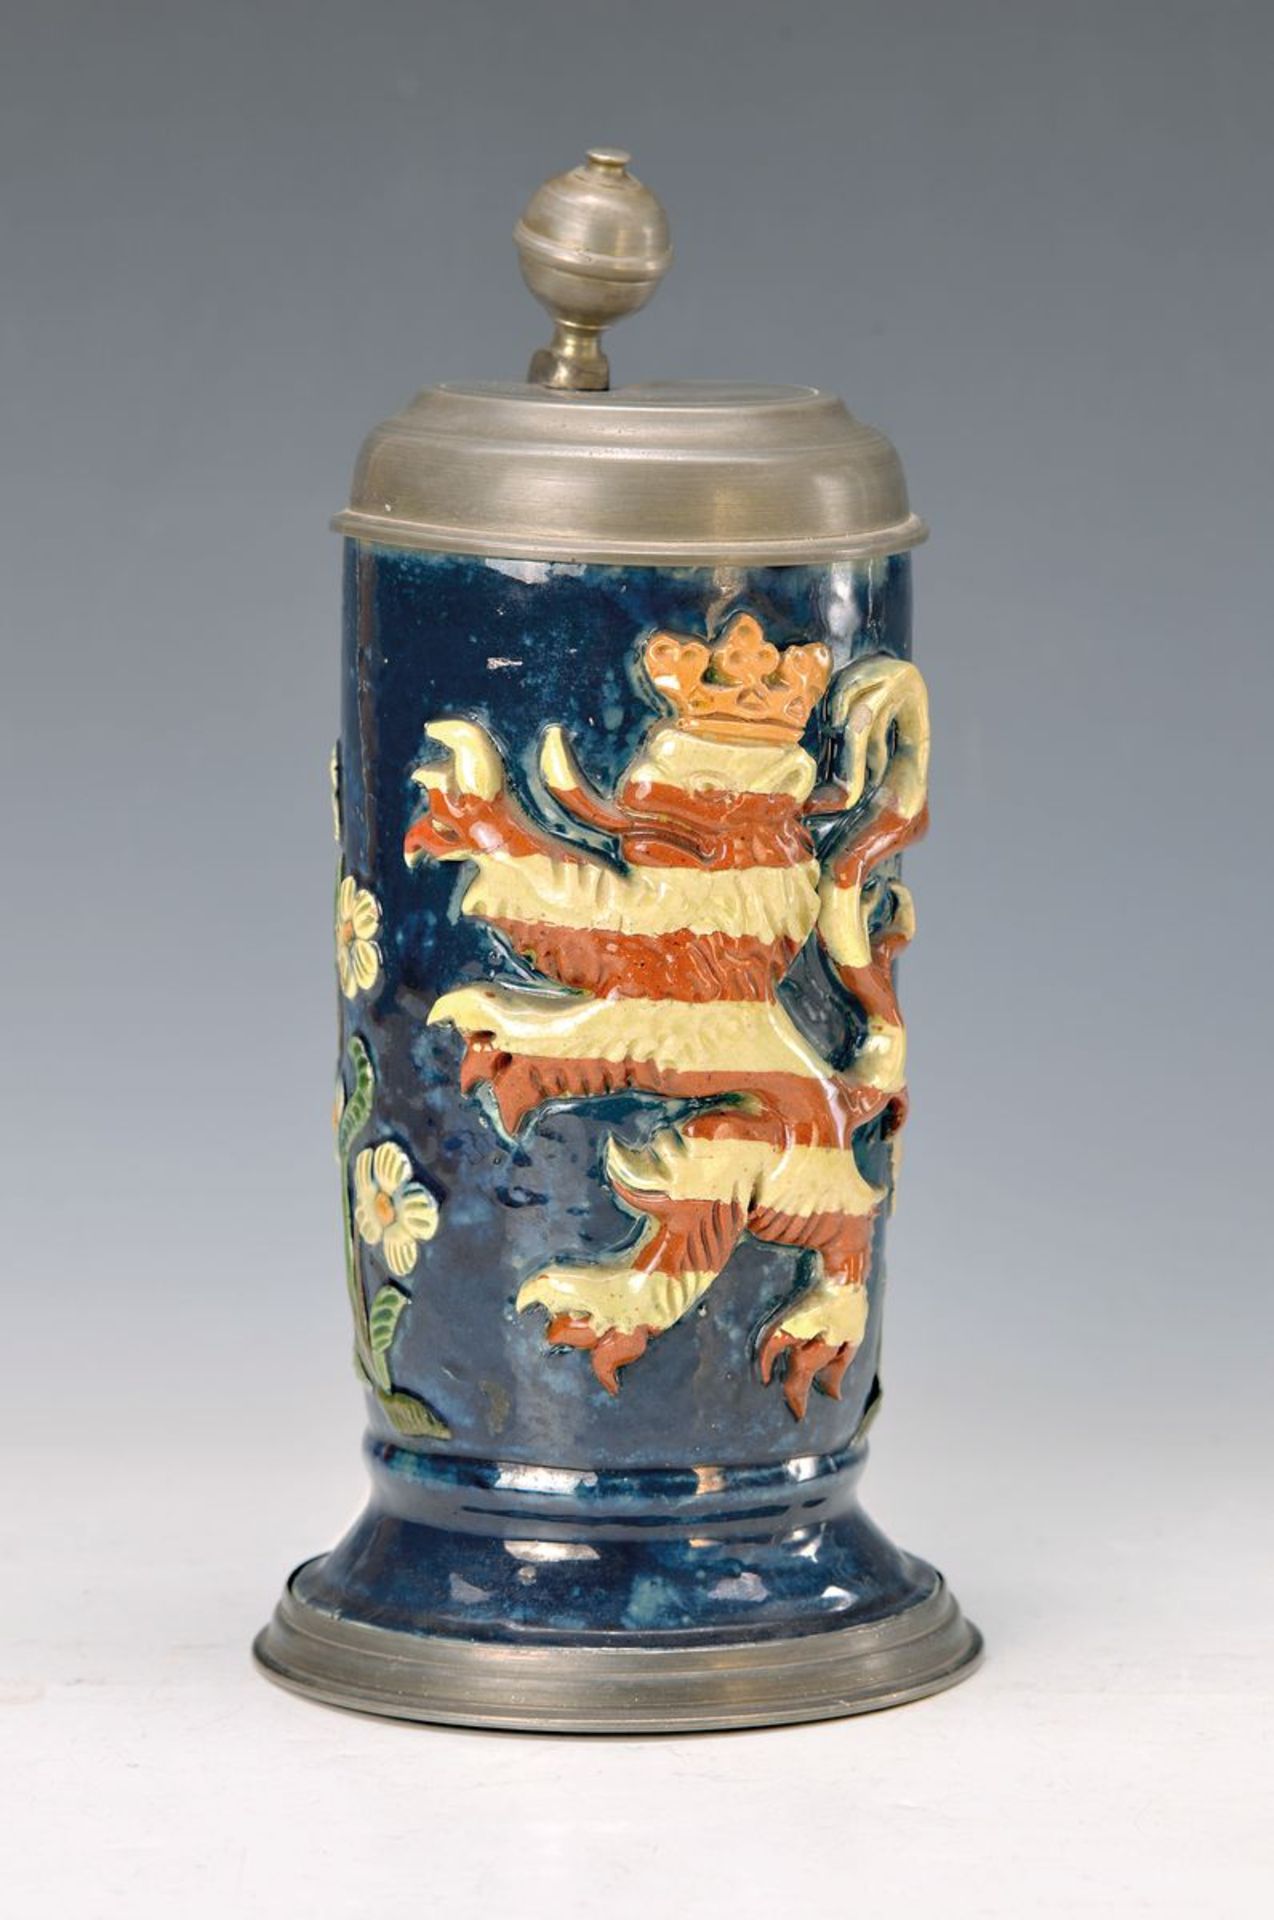 tin lid jar, probably Marburg, around 1880, "Hessian lion", ceramic blue ground with embossed